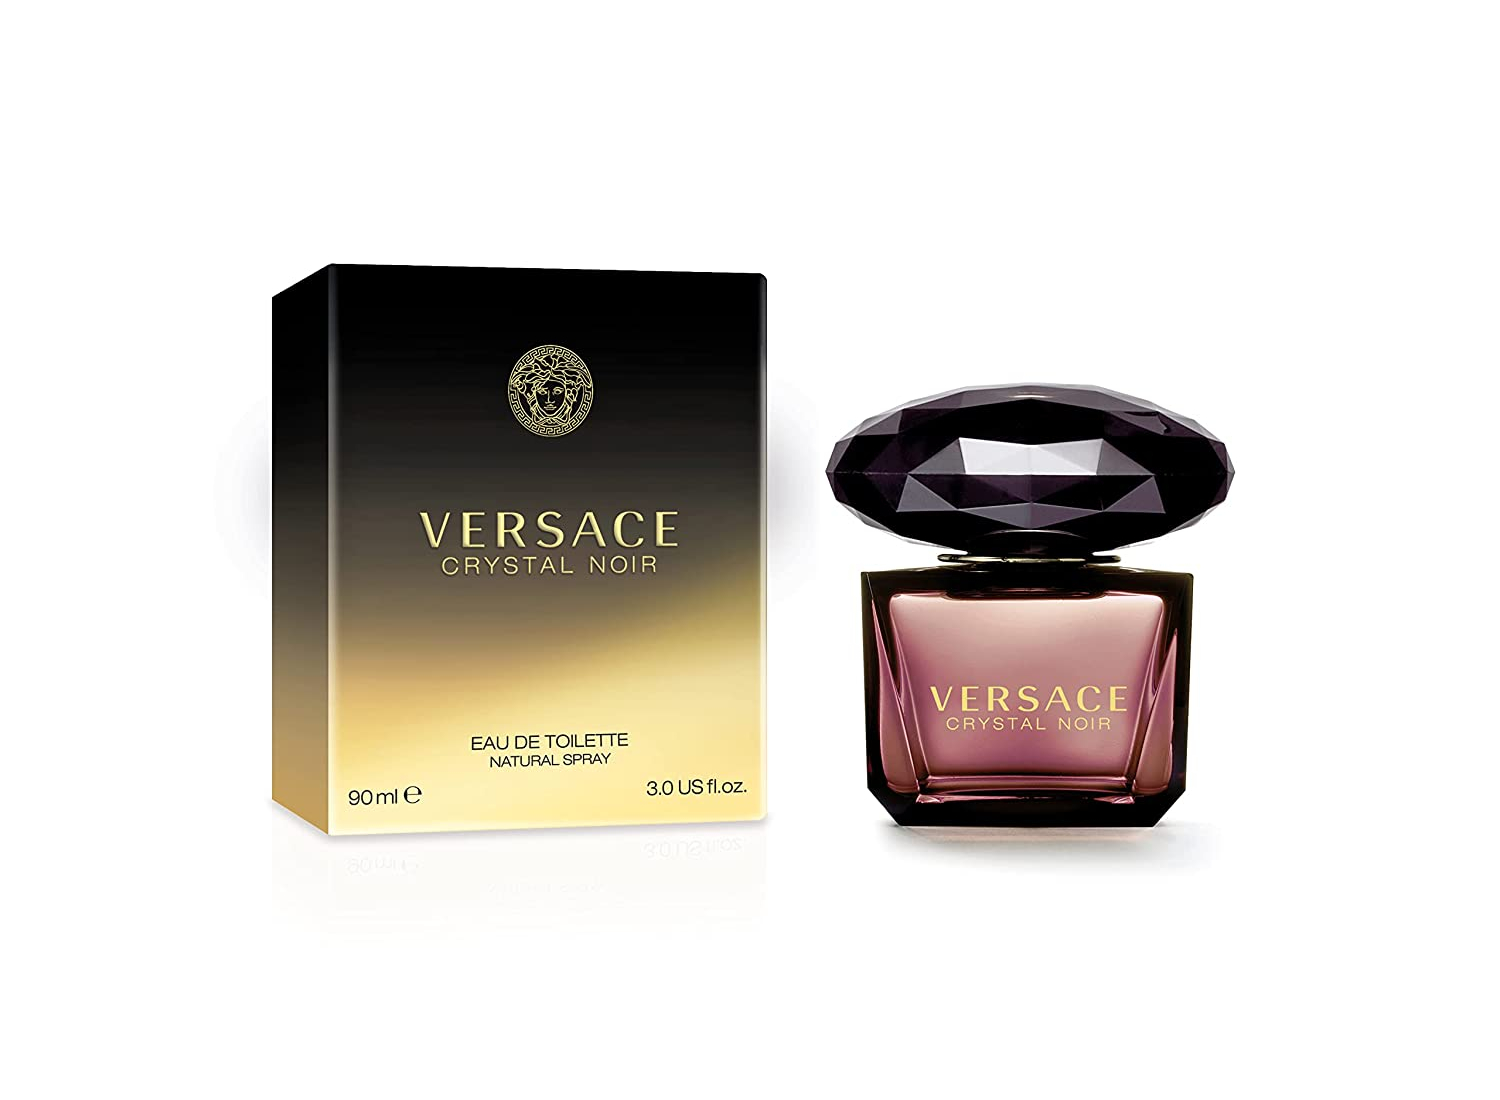 A bottle of Versace Crystal Noir perfume.